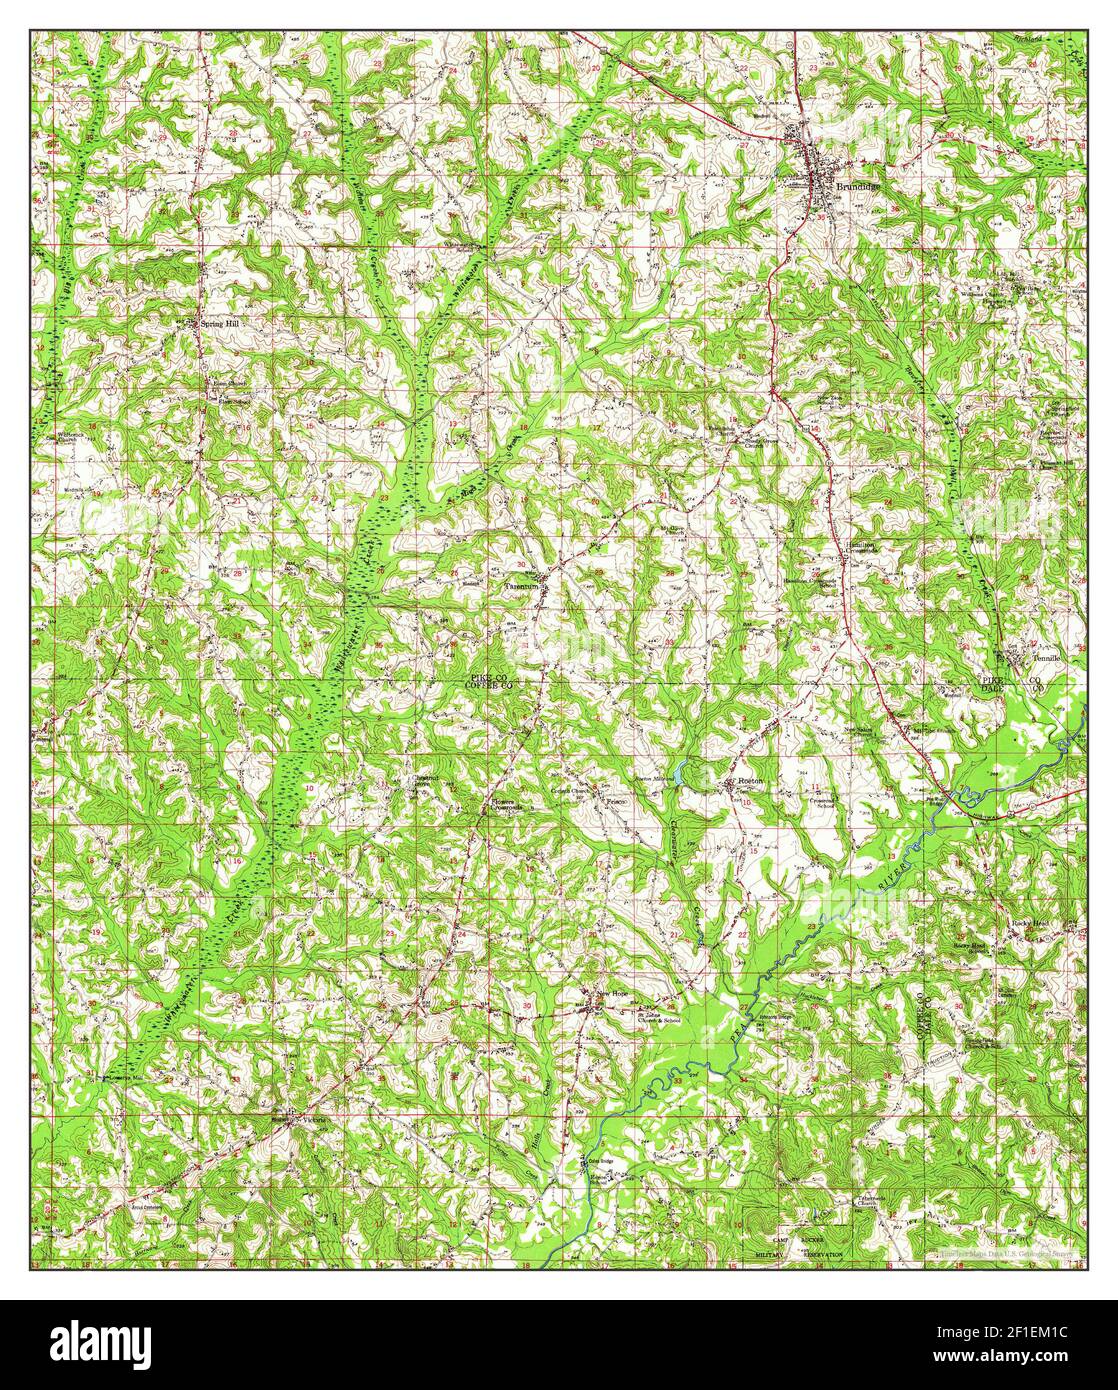 Brundidge, Alabama, map 1948, 1:62500, United States of America by Timeless Maps, data U.S. Geological Survey Stock Photo